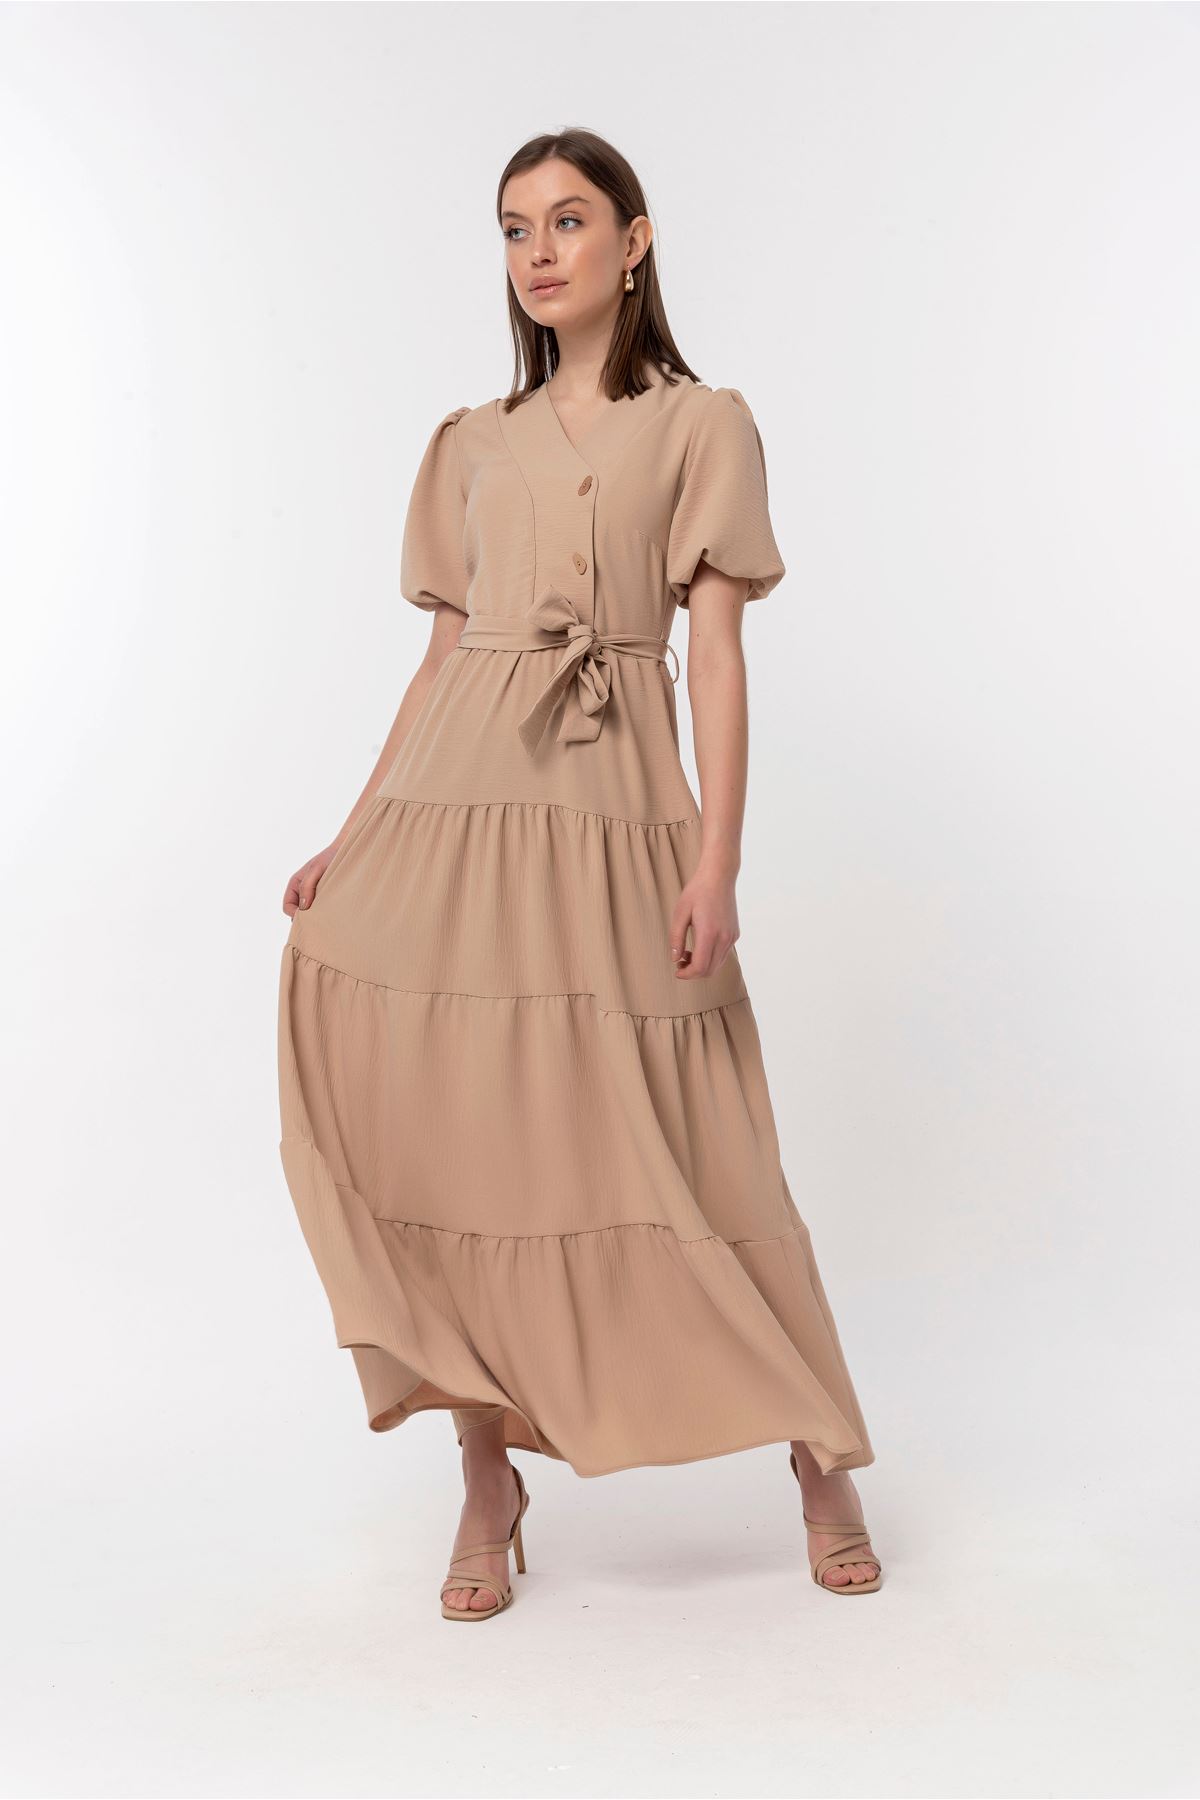 Aerobin Fabric Short Sleeve V-Neck Long Loose Fit Women Dress - Beige 